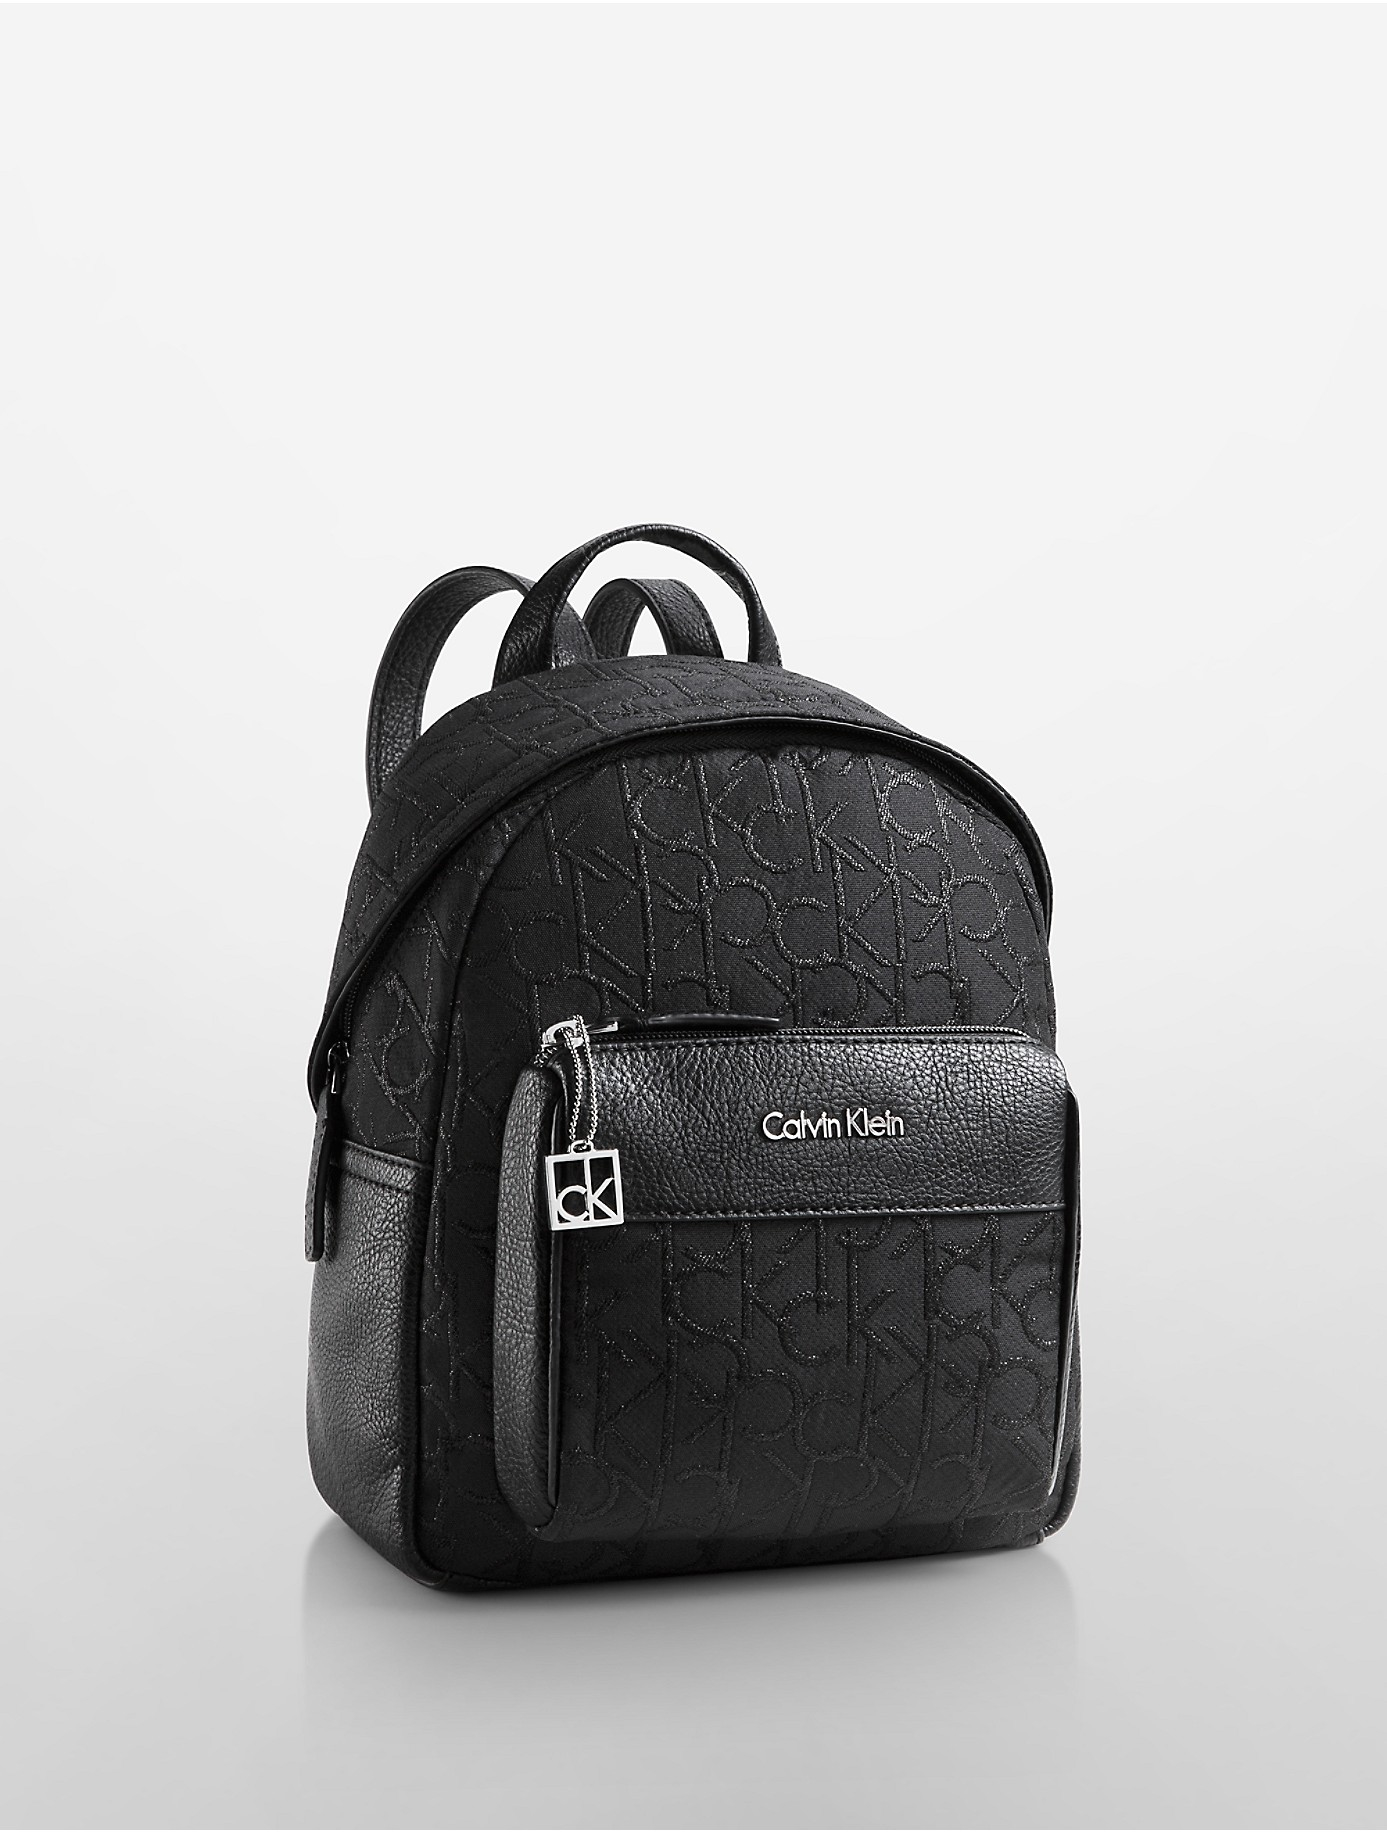 Calvin Klein Hailey City Backpack in Black - Lyst